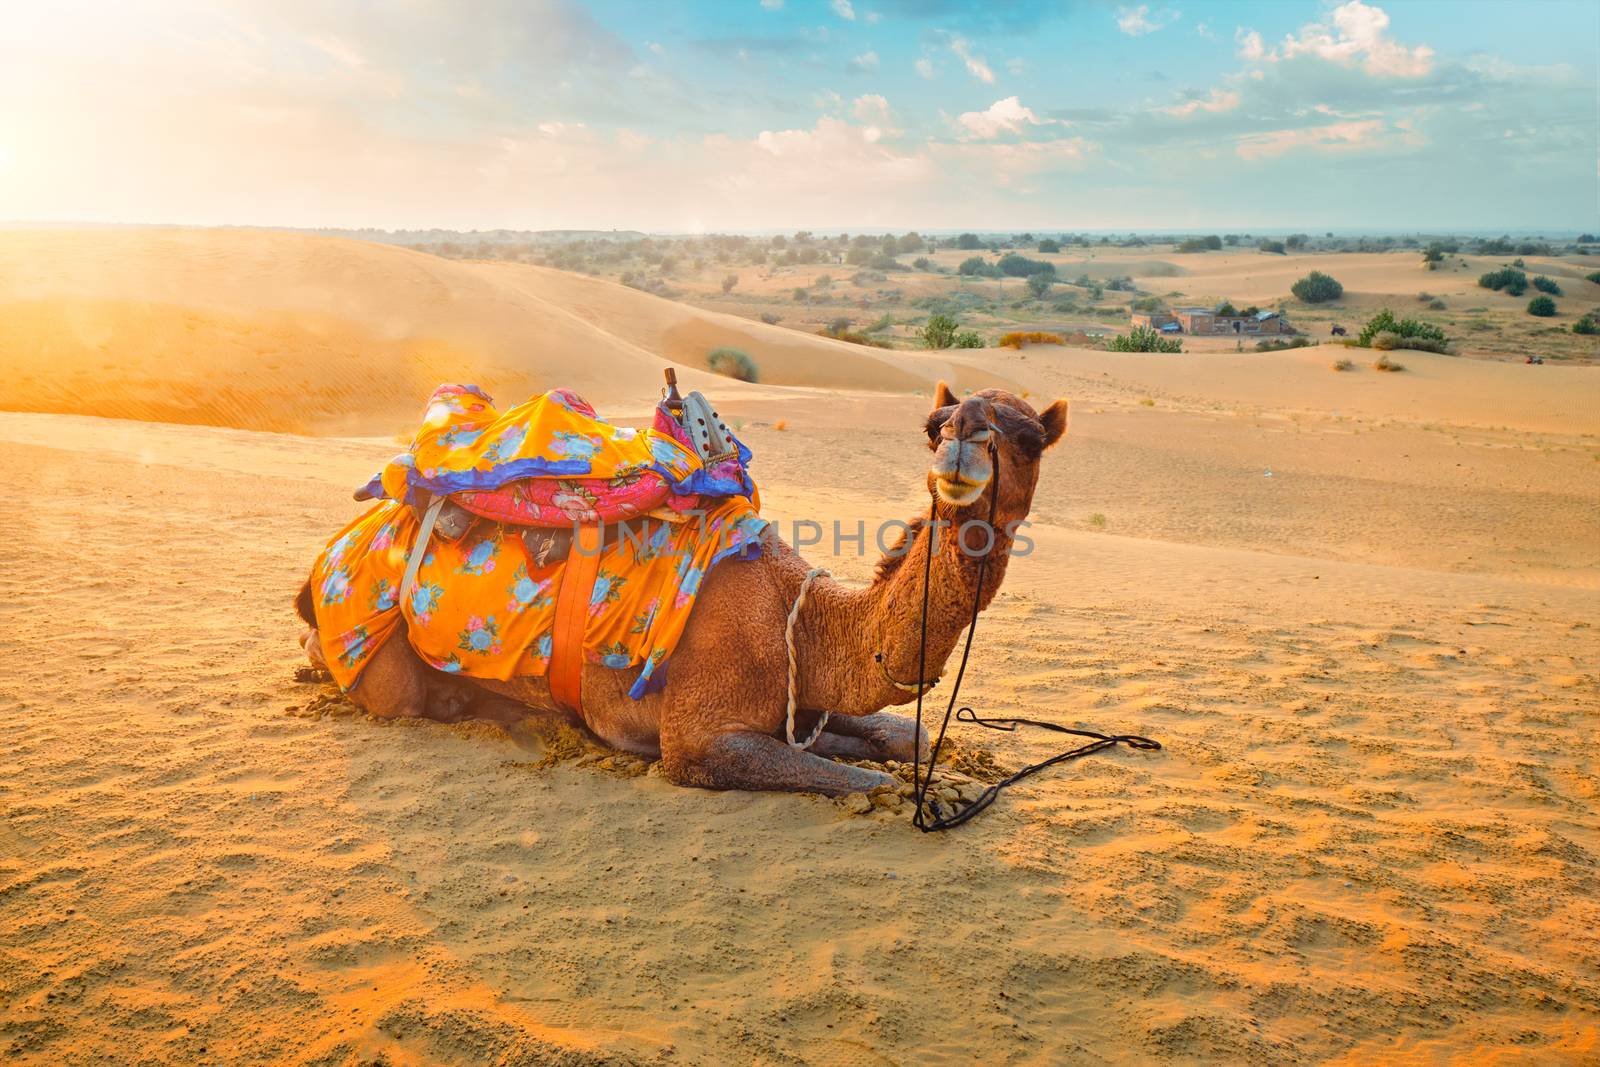 Indian camel in sand dunes of Thar desert on sunset. Jaisalmer, Rajasthan, India by dimol